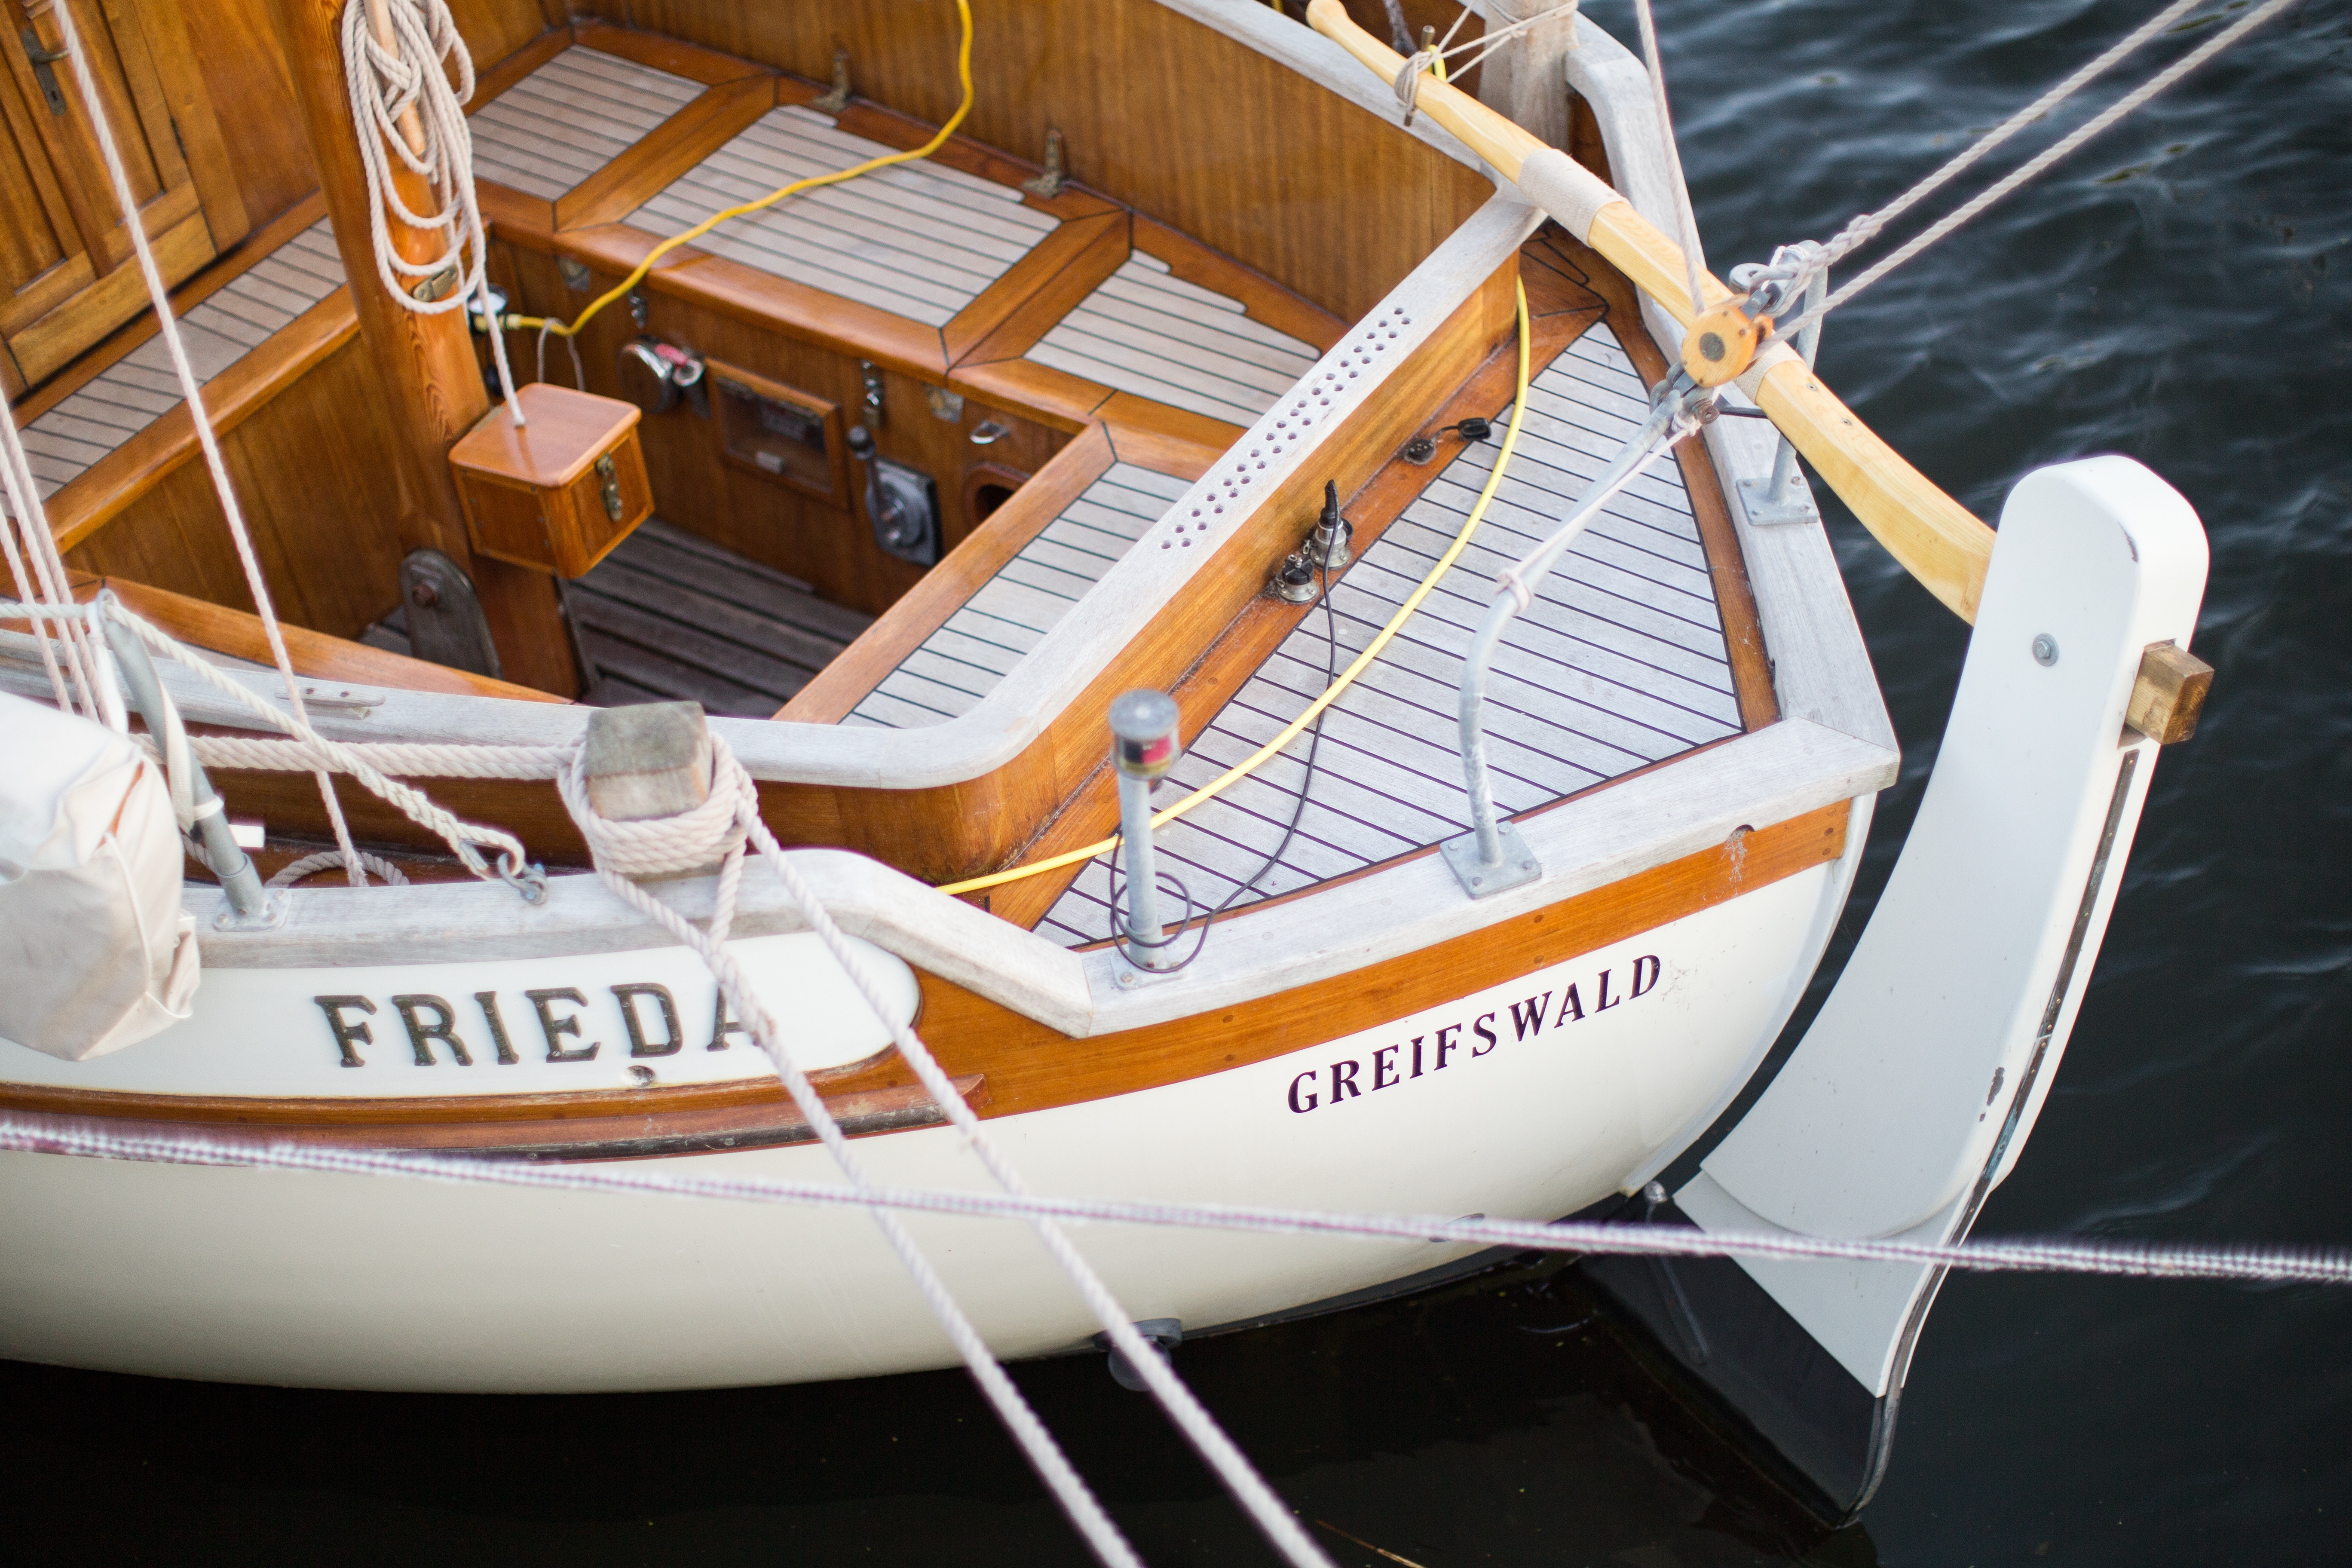 miscellanea, miscellaneous, yacht, vessel, frieda, greifswald